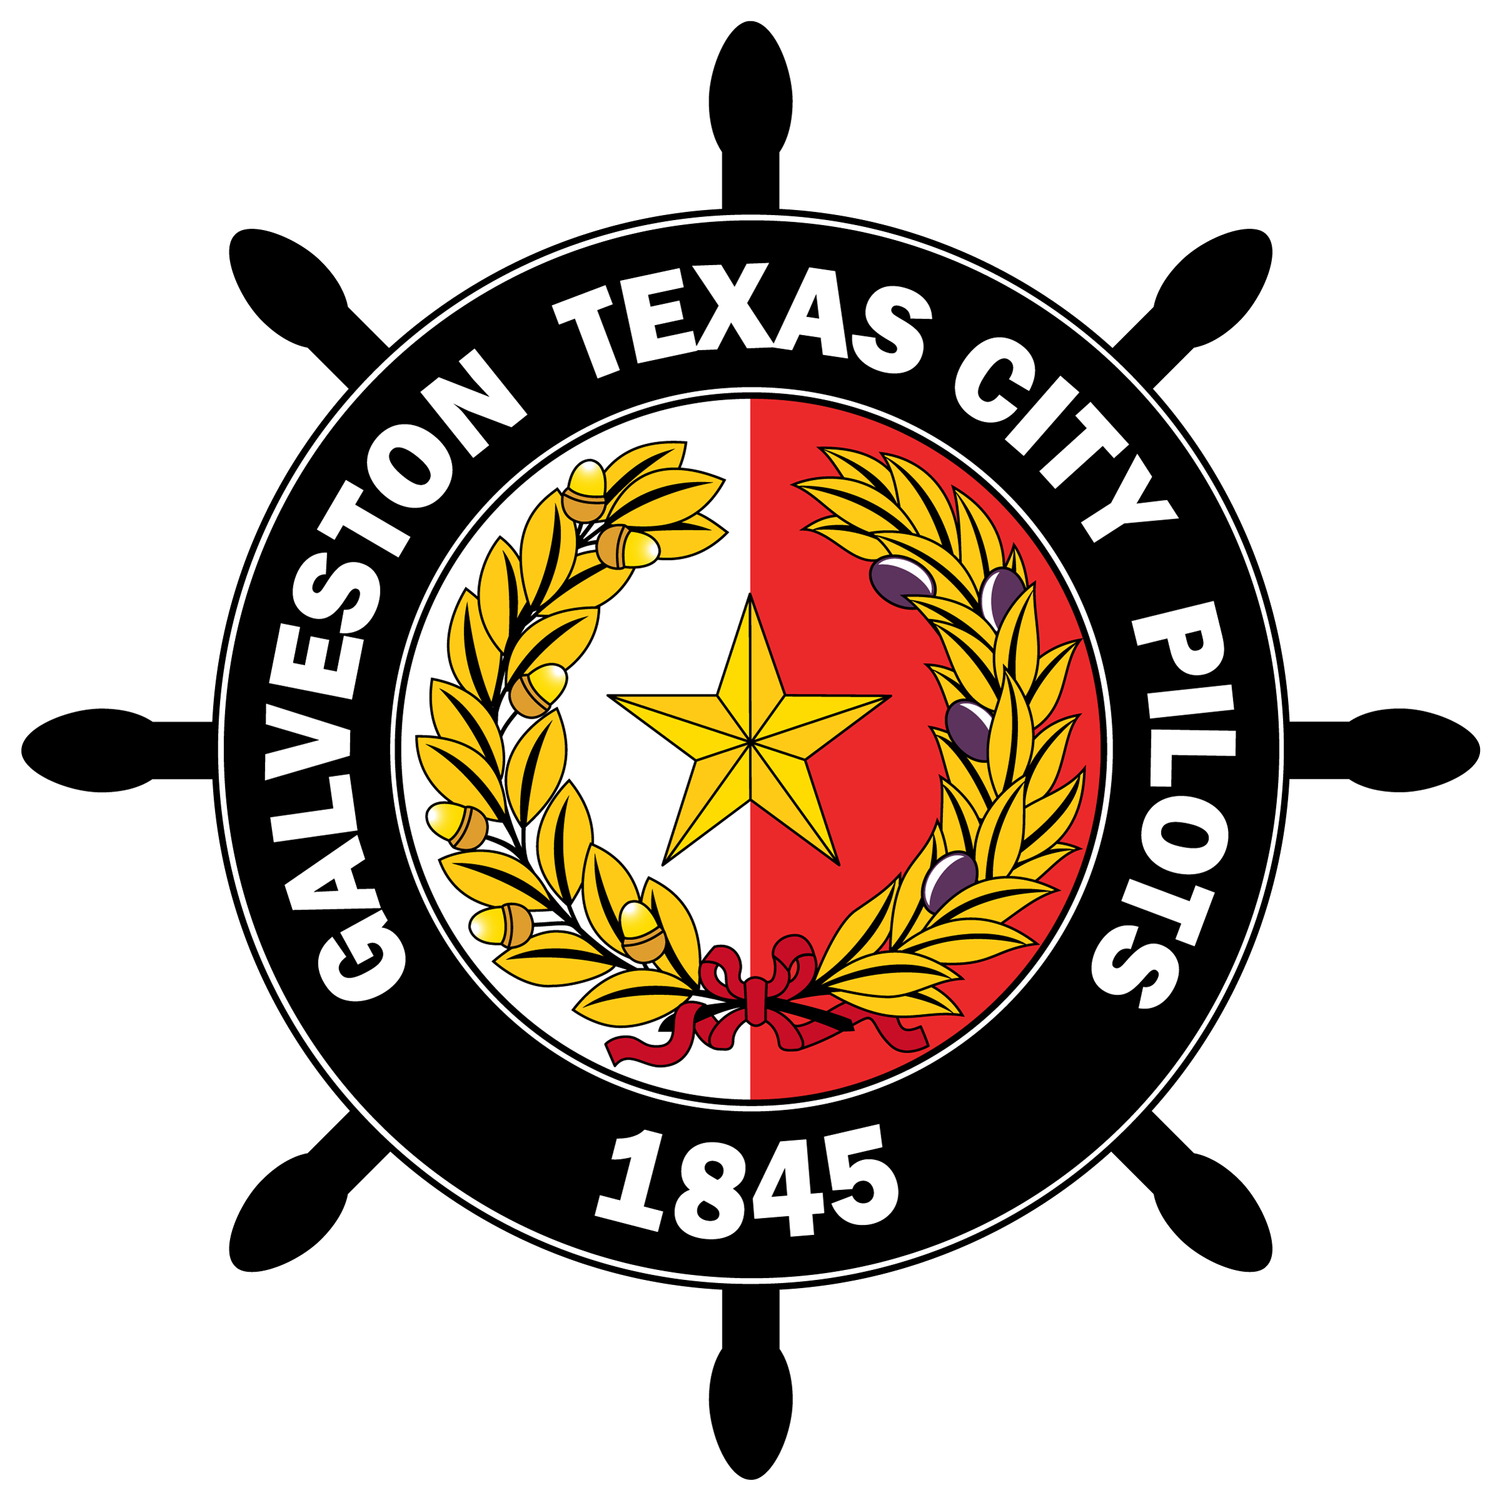 GalvGalveston-Texas City Pilots